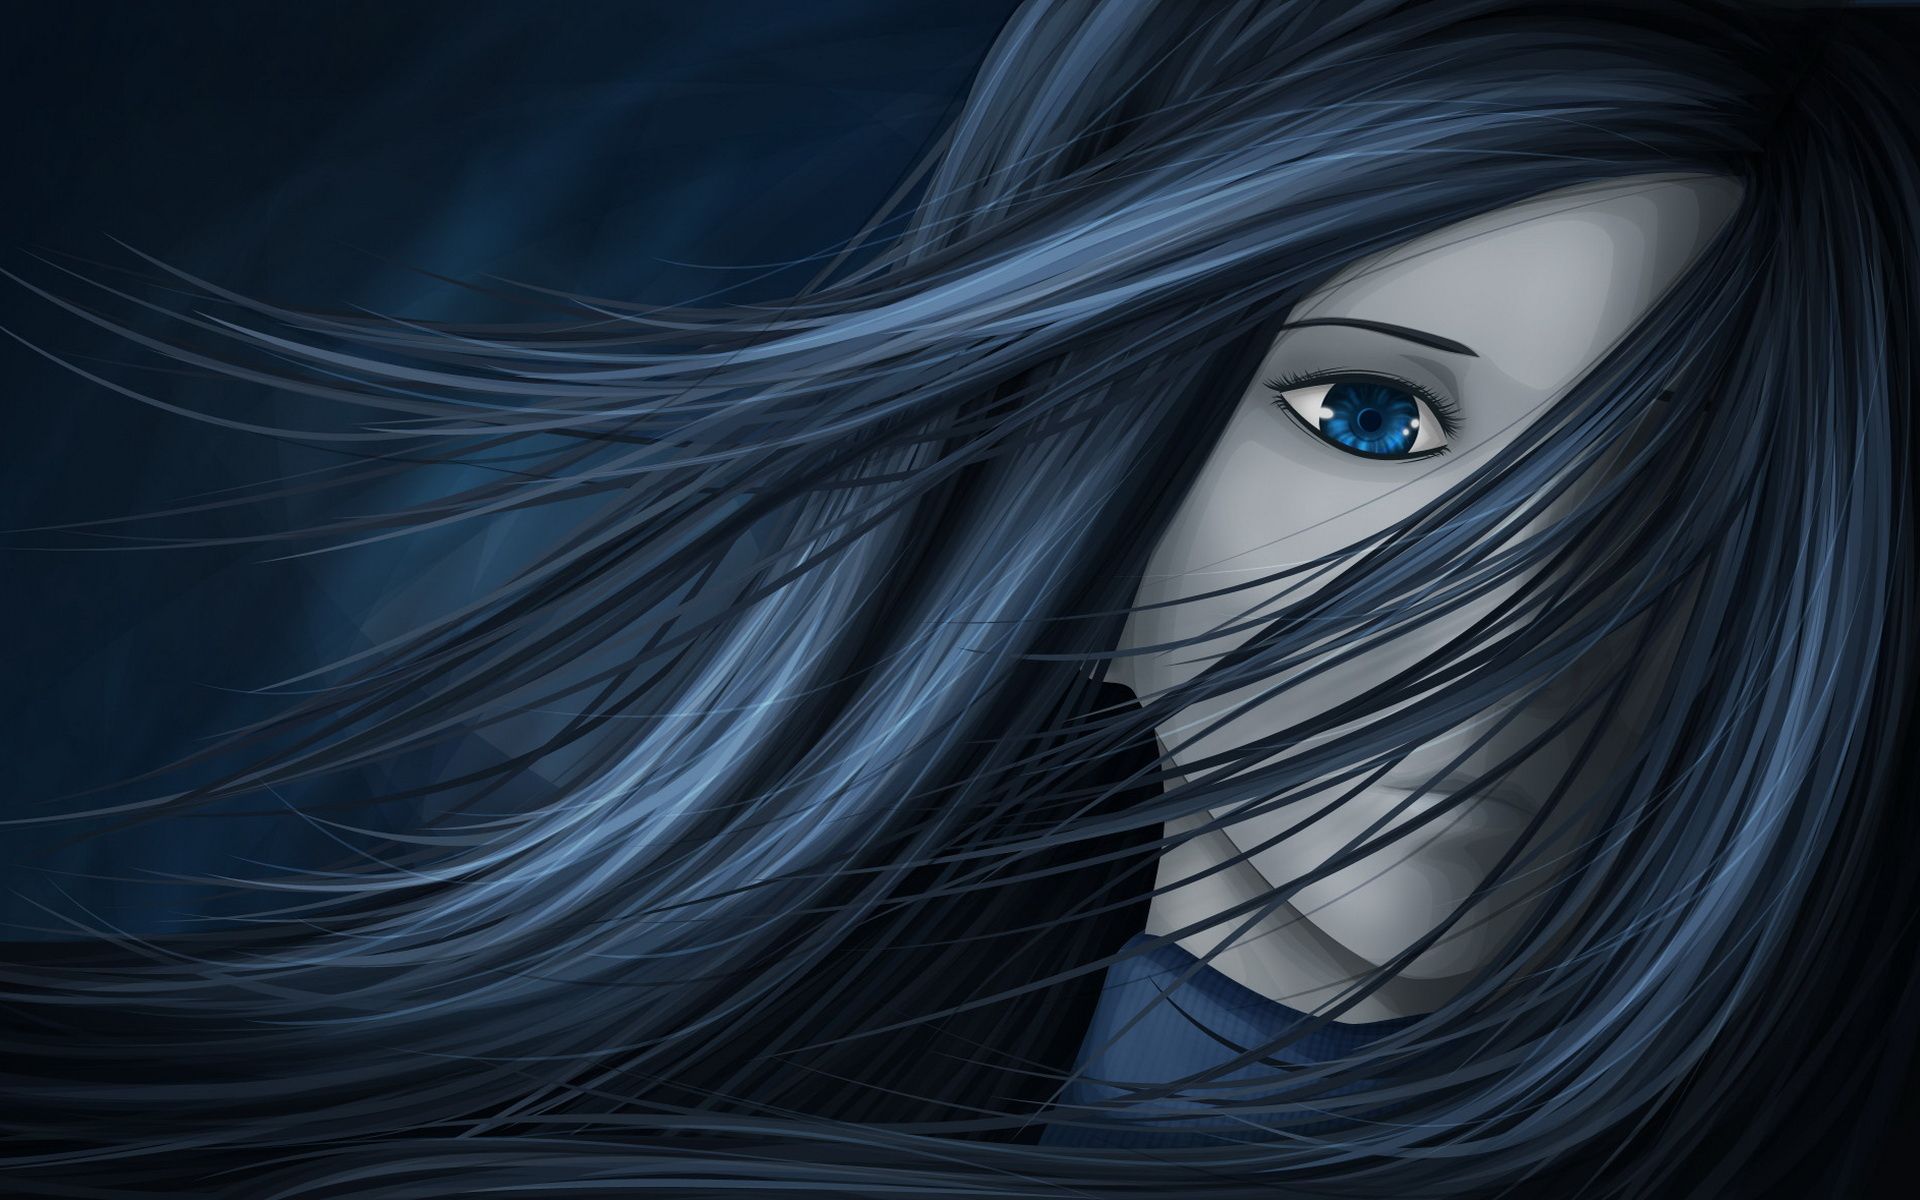 Anime Girl with Beautiful Blue Eyes Desktop Wallpaper - Free in 4K